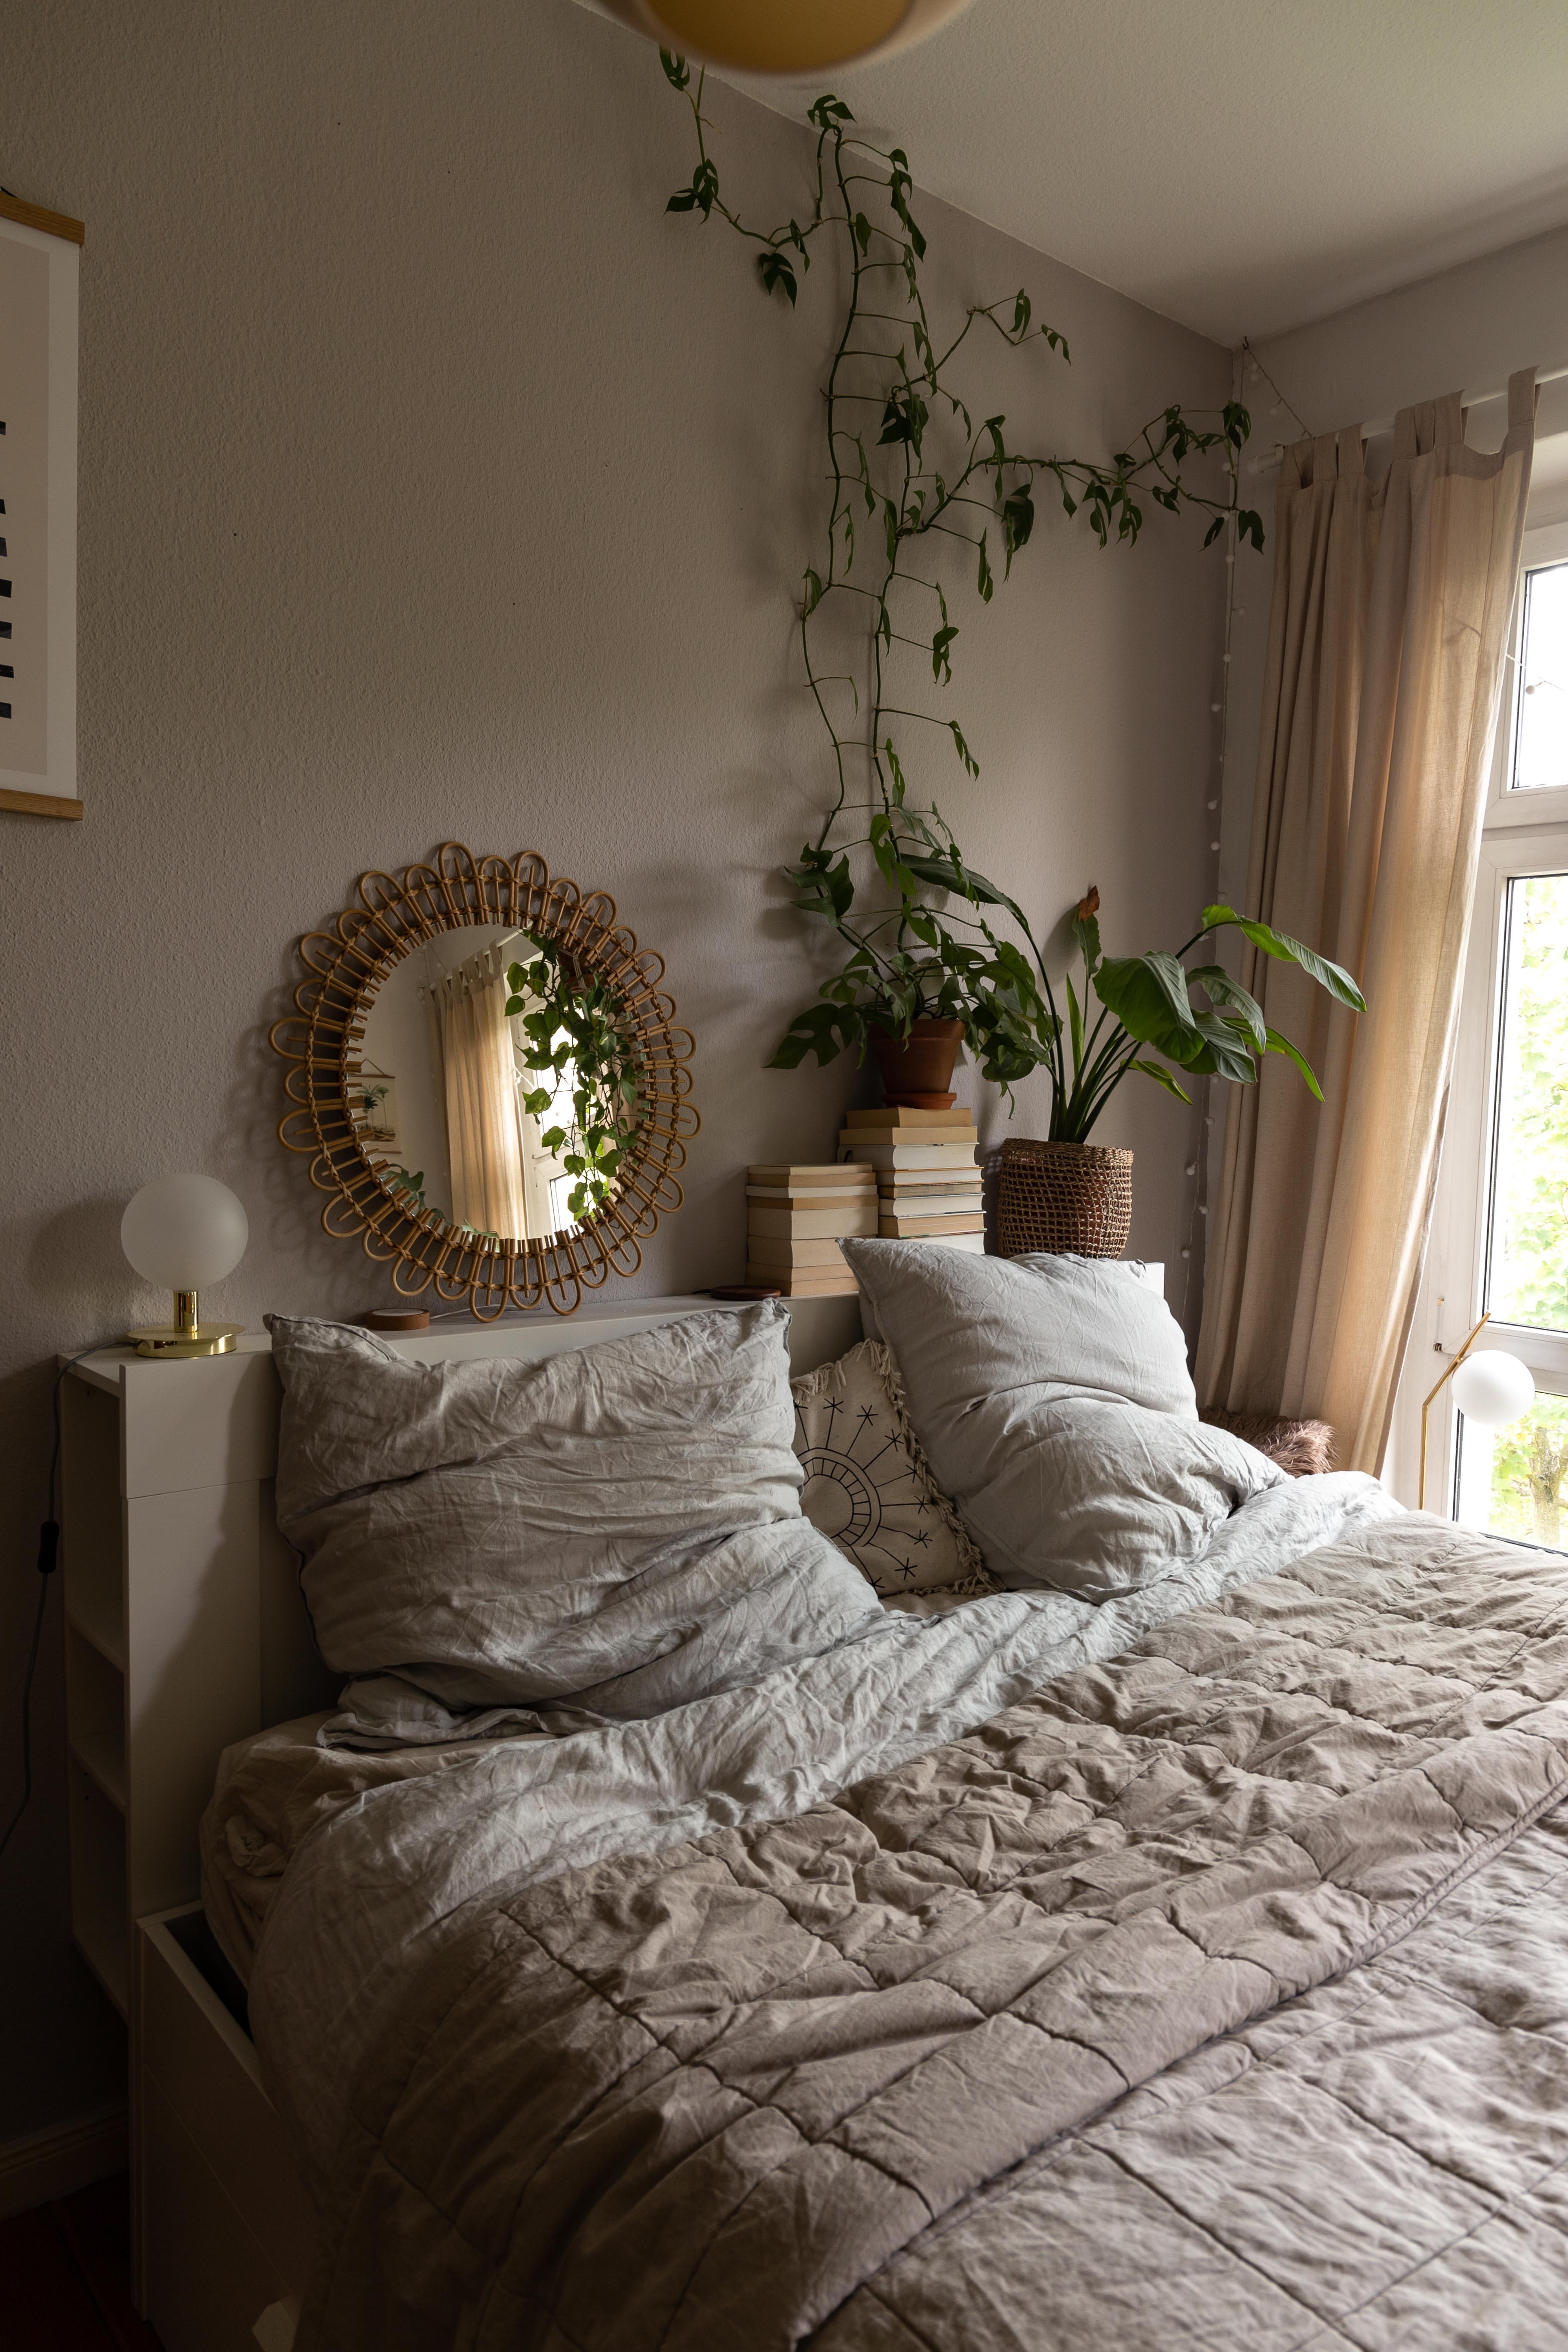 #schlafzimmer #schlafzimmerinspiration #bedroom #bedroominspo #bedroomdesign #naturalinterior #homedecor #interiordecor 